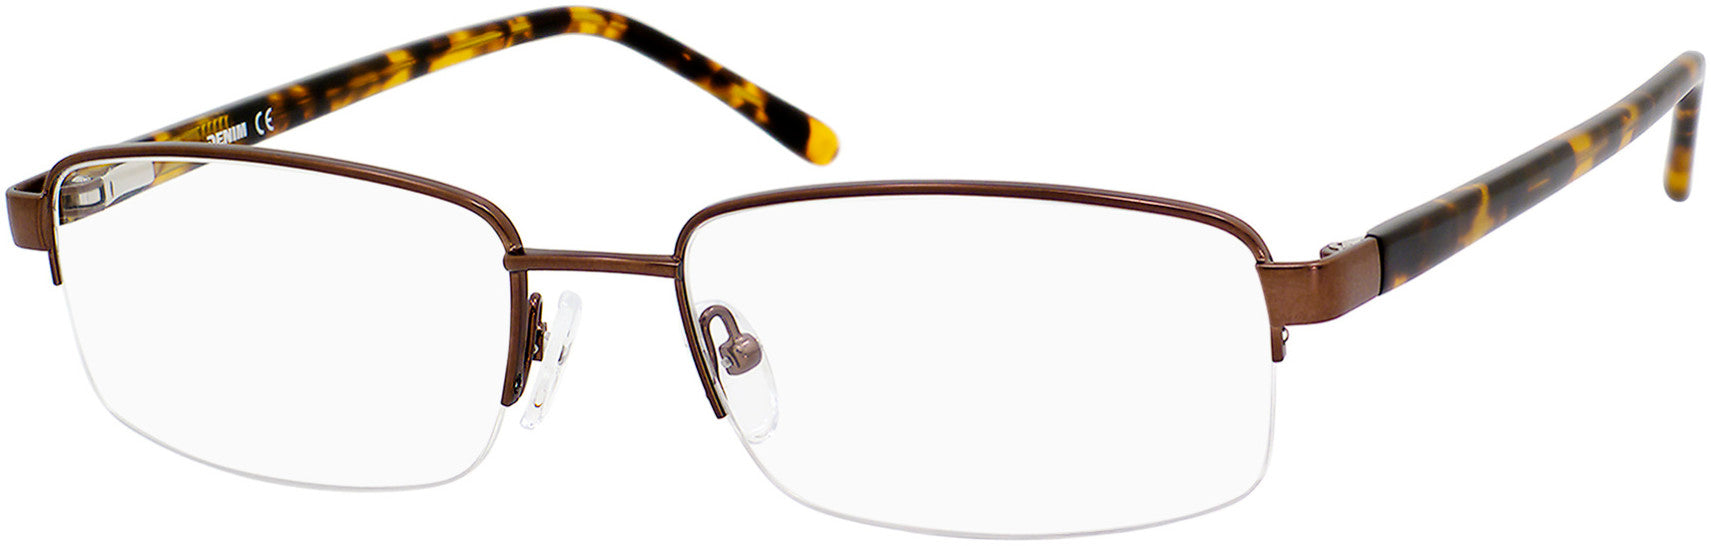  Denim 147 Rectangular Eyeglasses 01D1-01D1  Brown (00 Demo Lens)